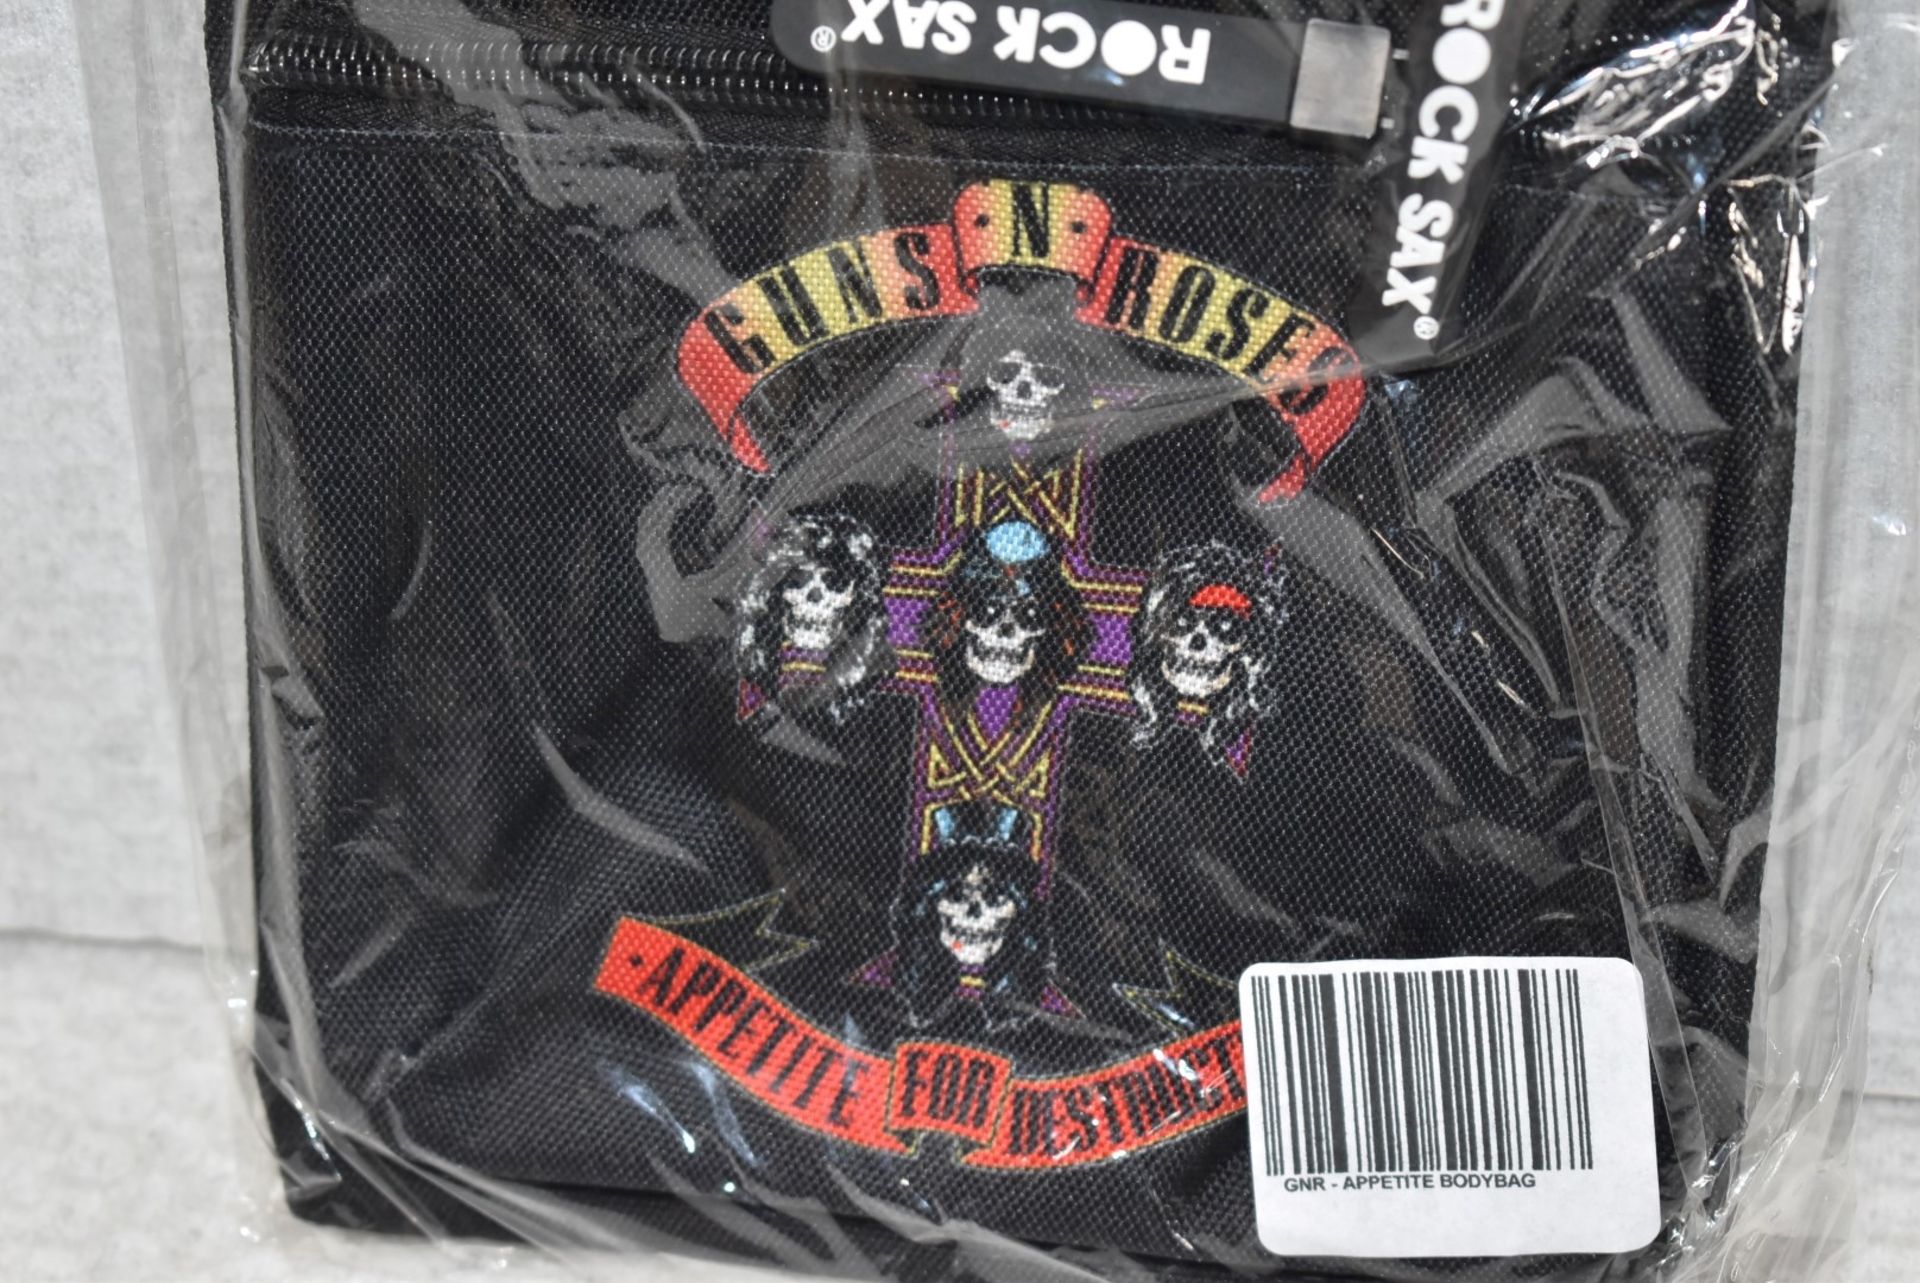 1 x Guns N Roses Cross Body Festival Bag by Rock Sax - Iconic Appetite For Destruction Logo - - Image 2 of 3